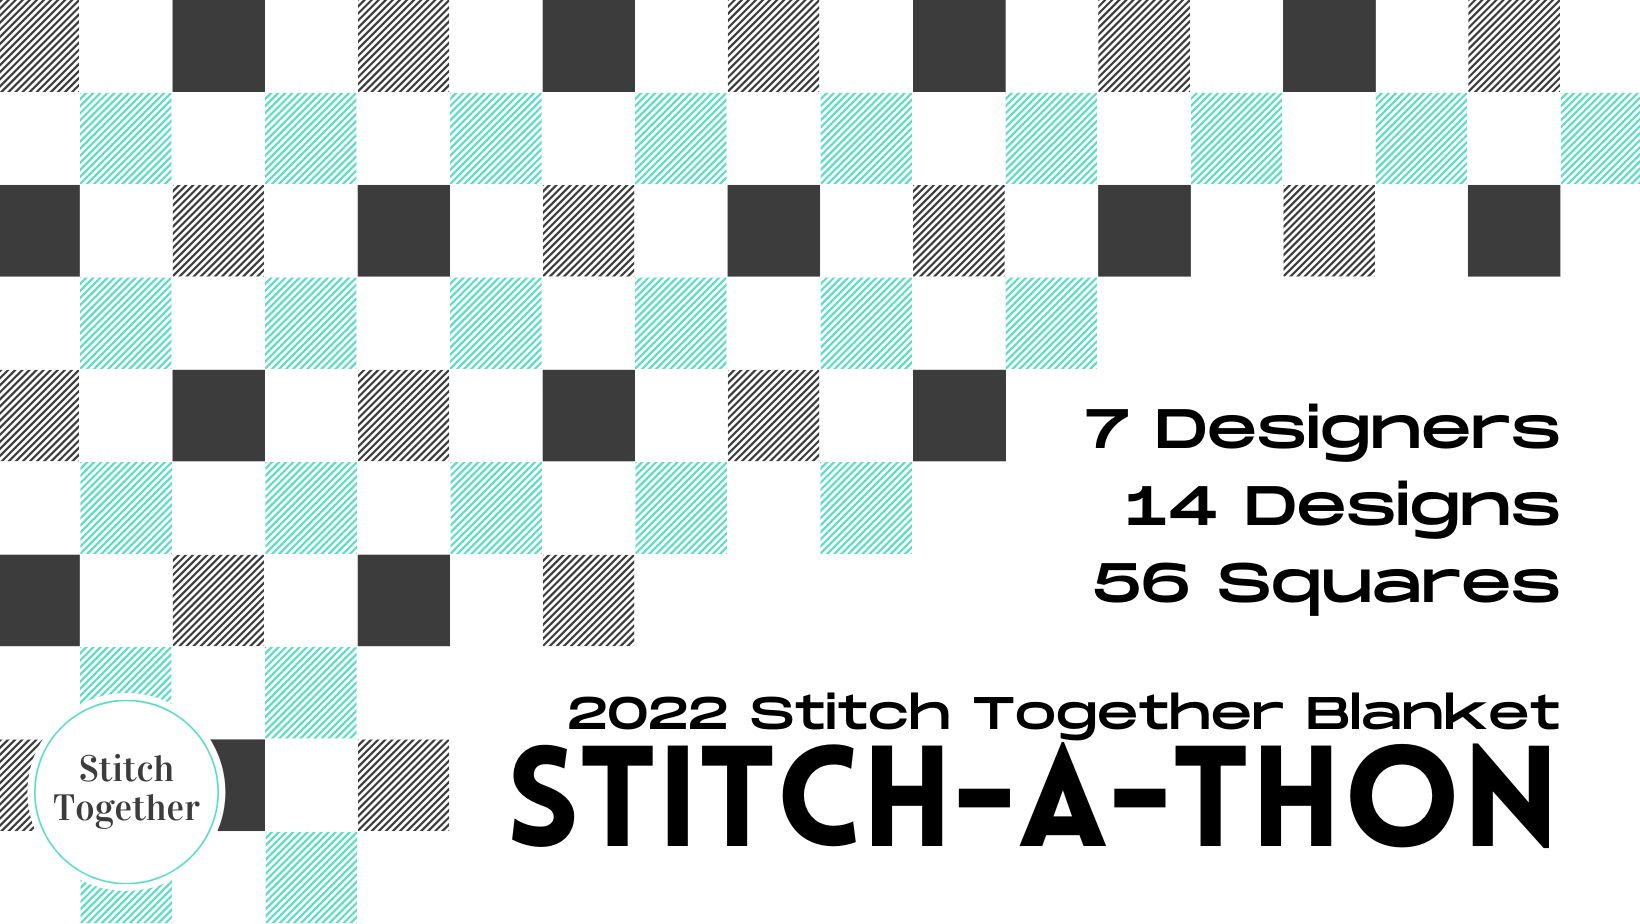 2022 Stitch Together Blanket Stitch-A-Thon Square 8 Free Crochet Pattern